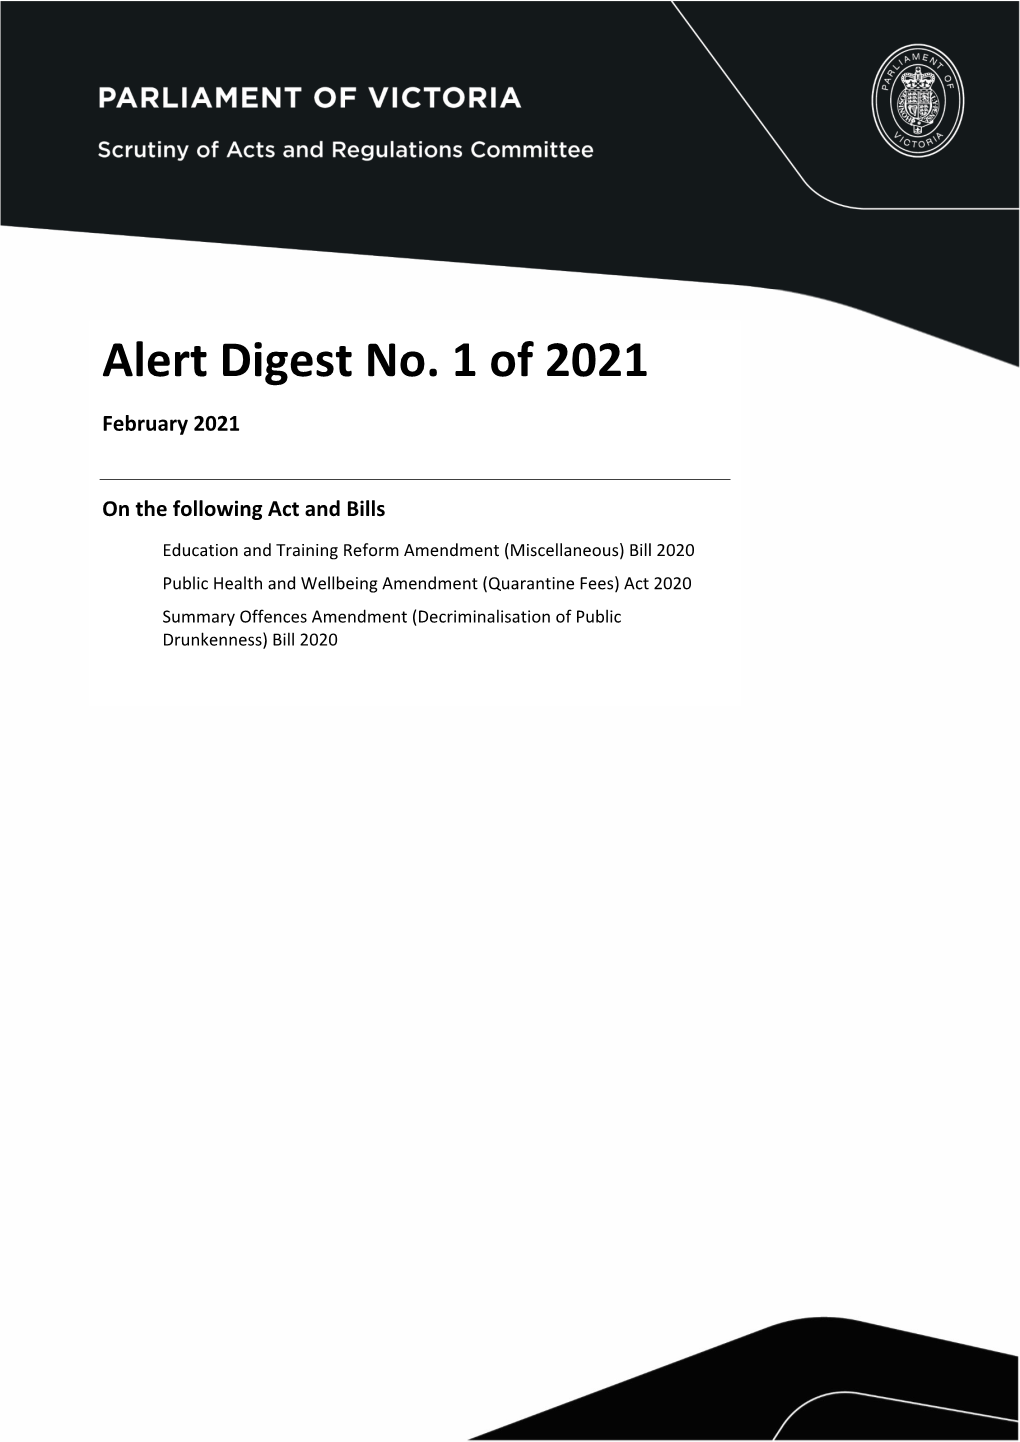 Alert Digest No 1 of 2021, February 2021